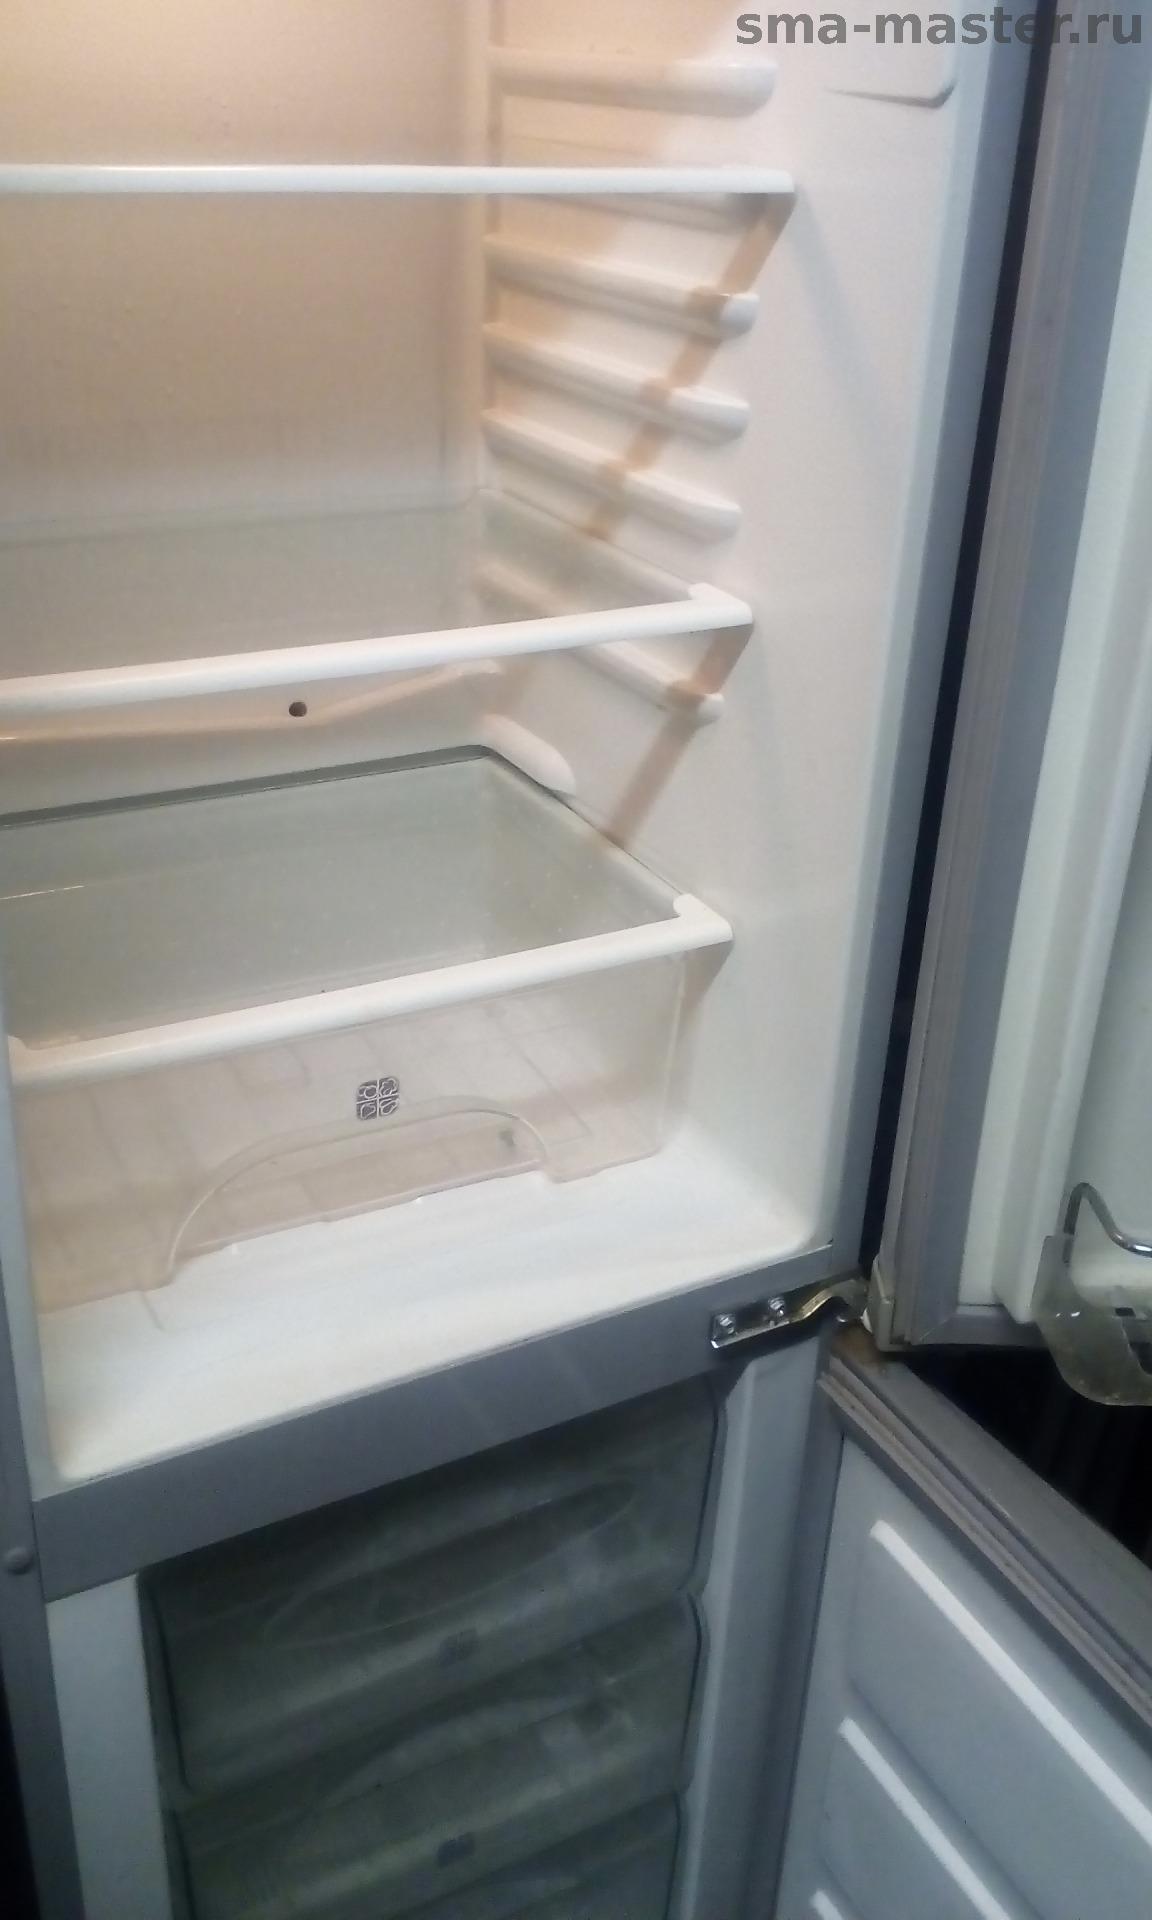 Морозилка снизу. Холодильник ширина 45 см двухкамерный. Холодильник самсунг 45 см ширина двухкамерный. Холодильник самсунг компакт. Холодильник двухкамерный самсунг ширина 45.